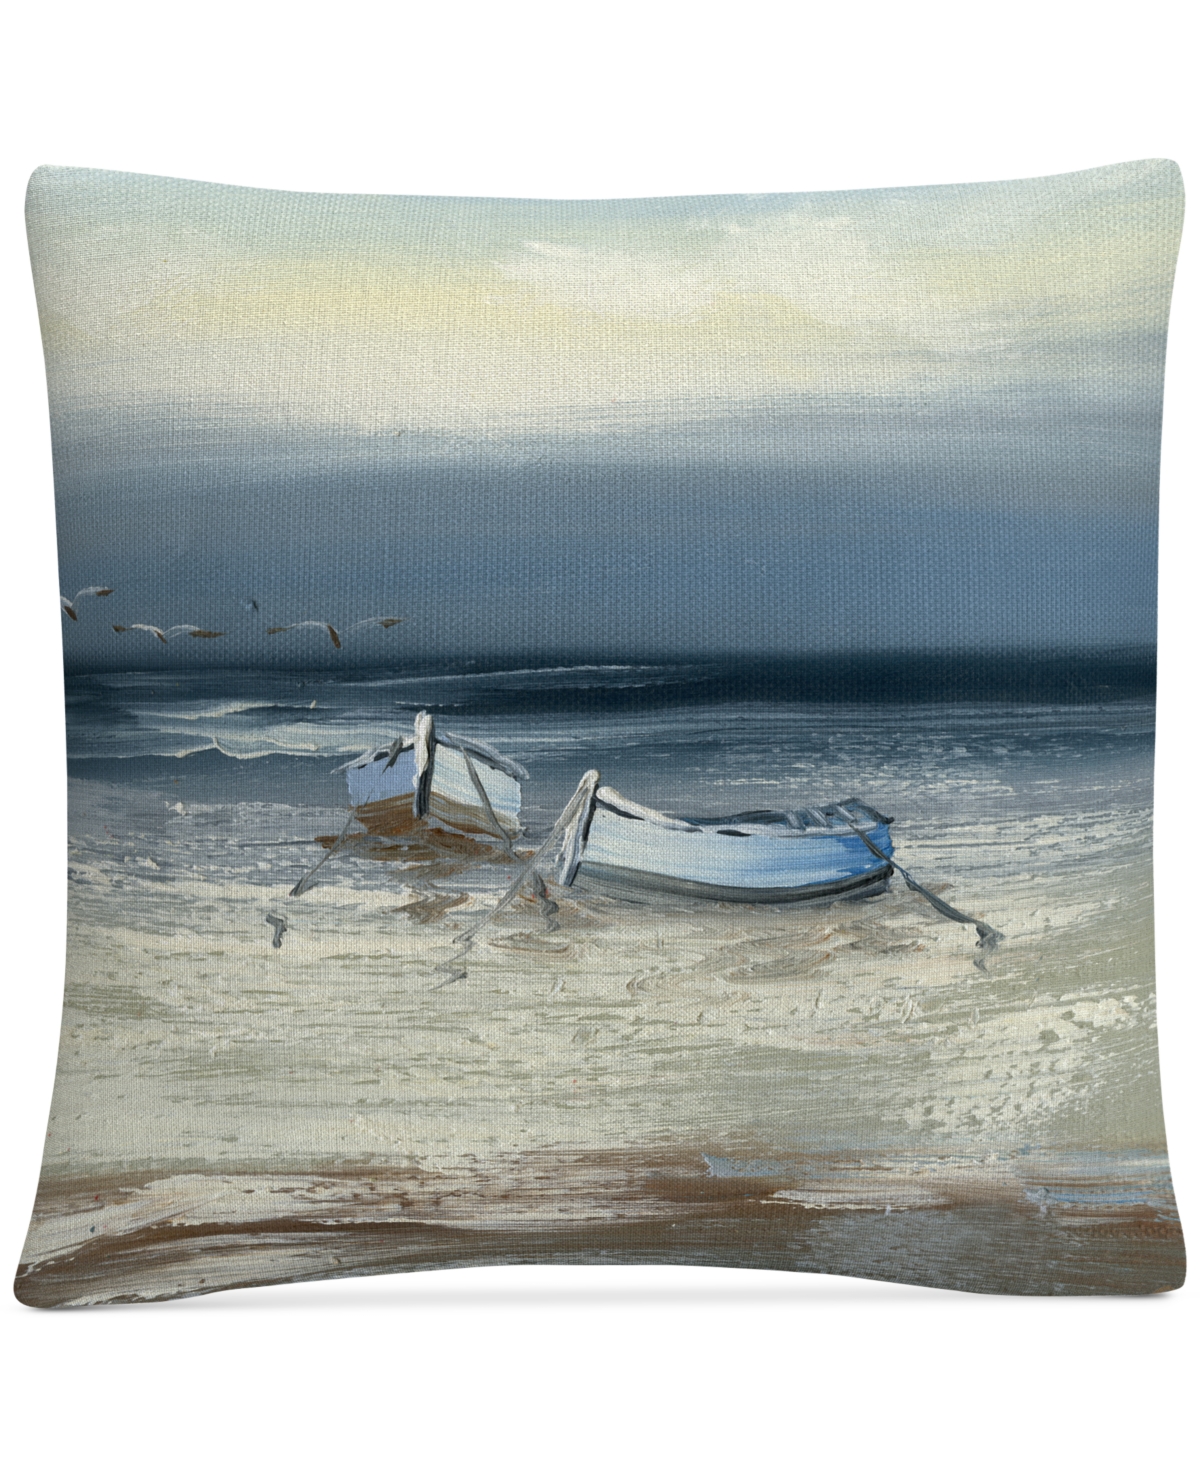 Rio Low Tide Decorative Pillow, 16 x 16